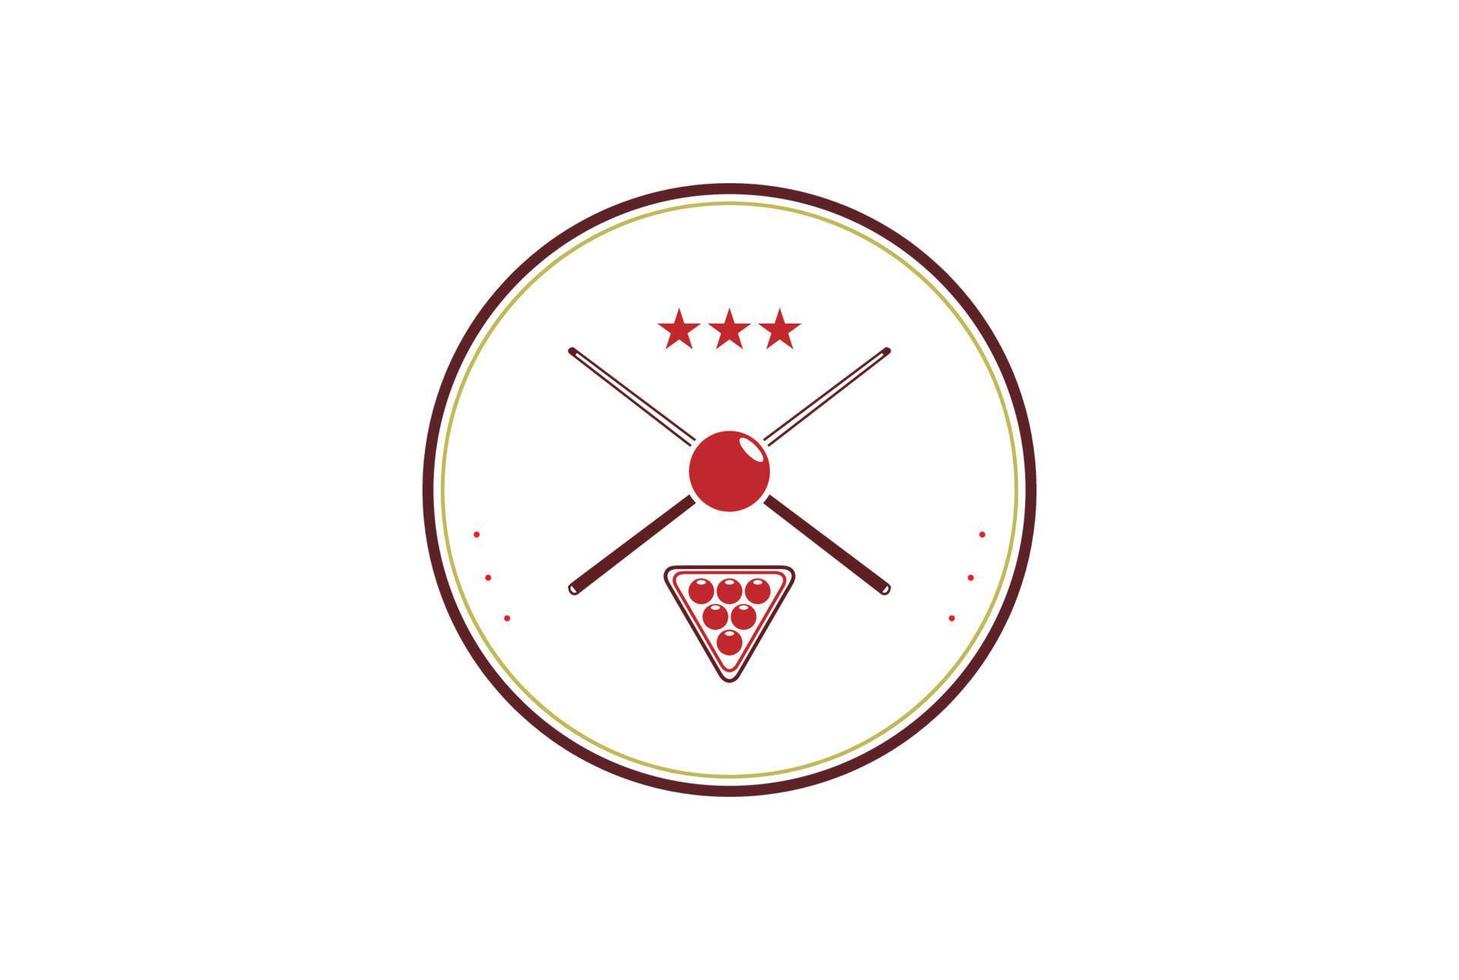 emblema de emblema de piscina de varas cruzadas retrô vintage para vetor de design de logotipo de clube de esporte de bilhar